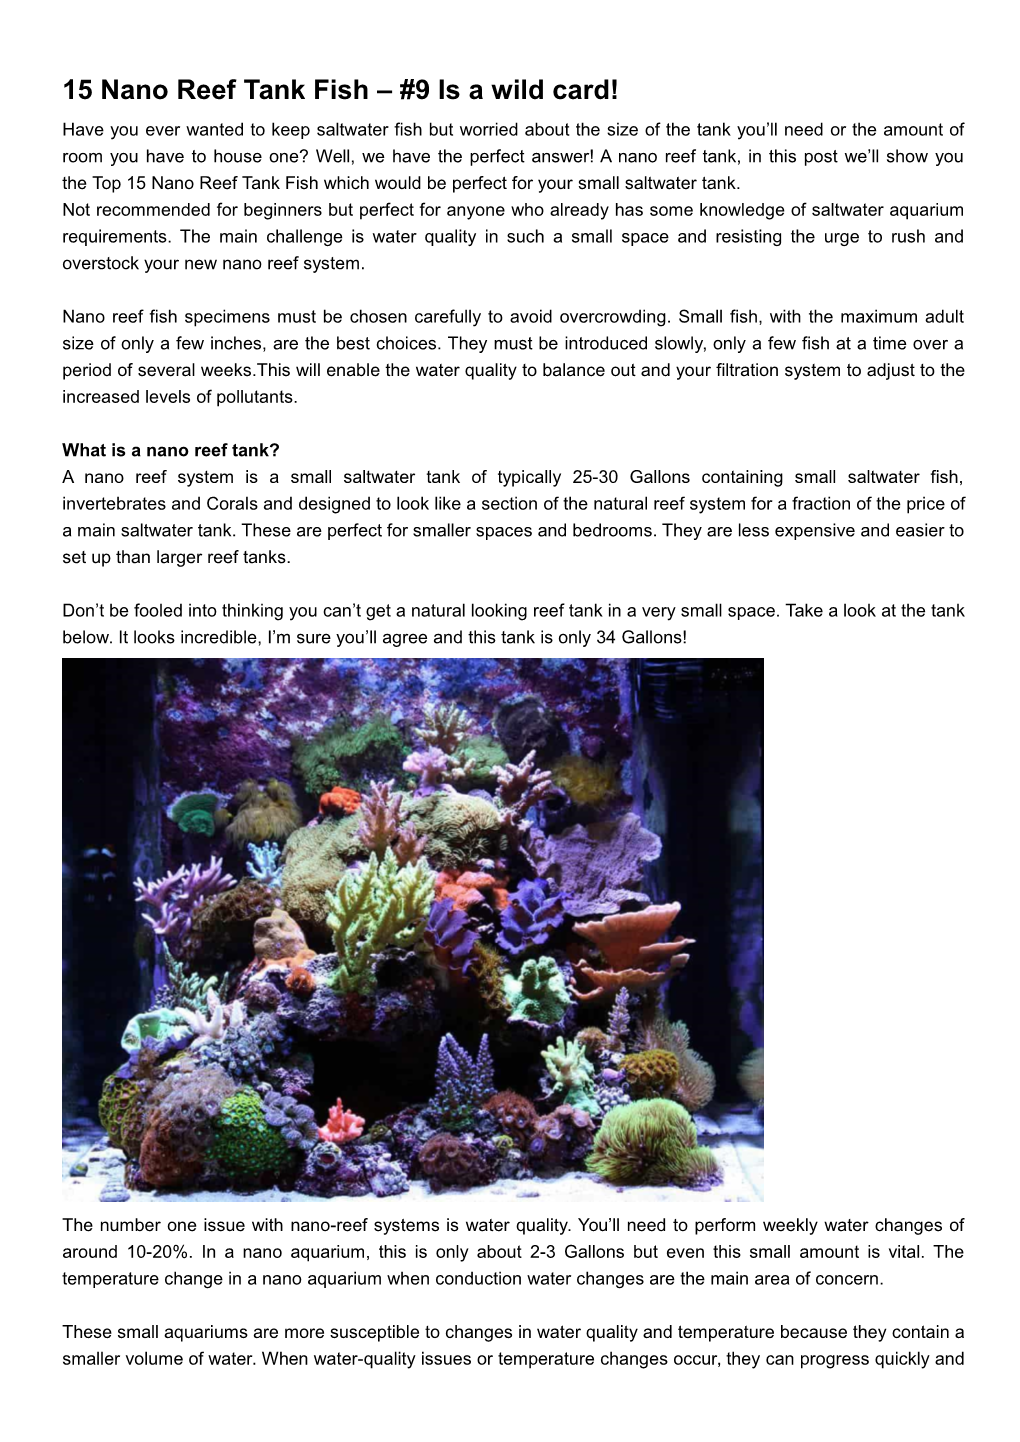 15 Nano Reef Tank Fish – #9 Is a Wild Card!